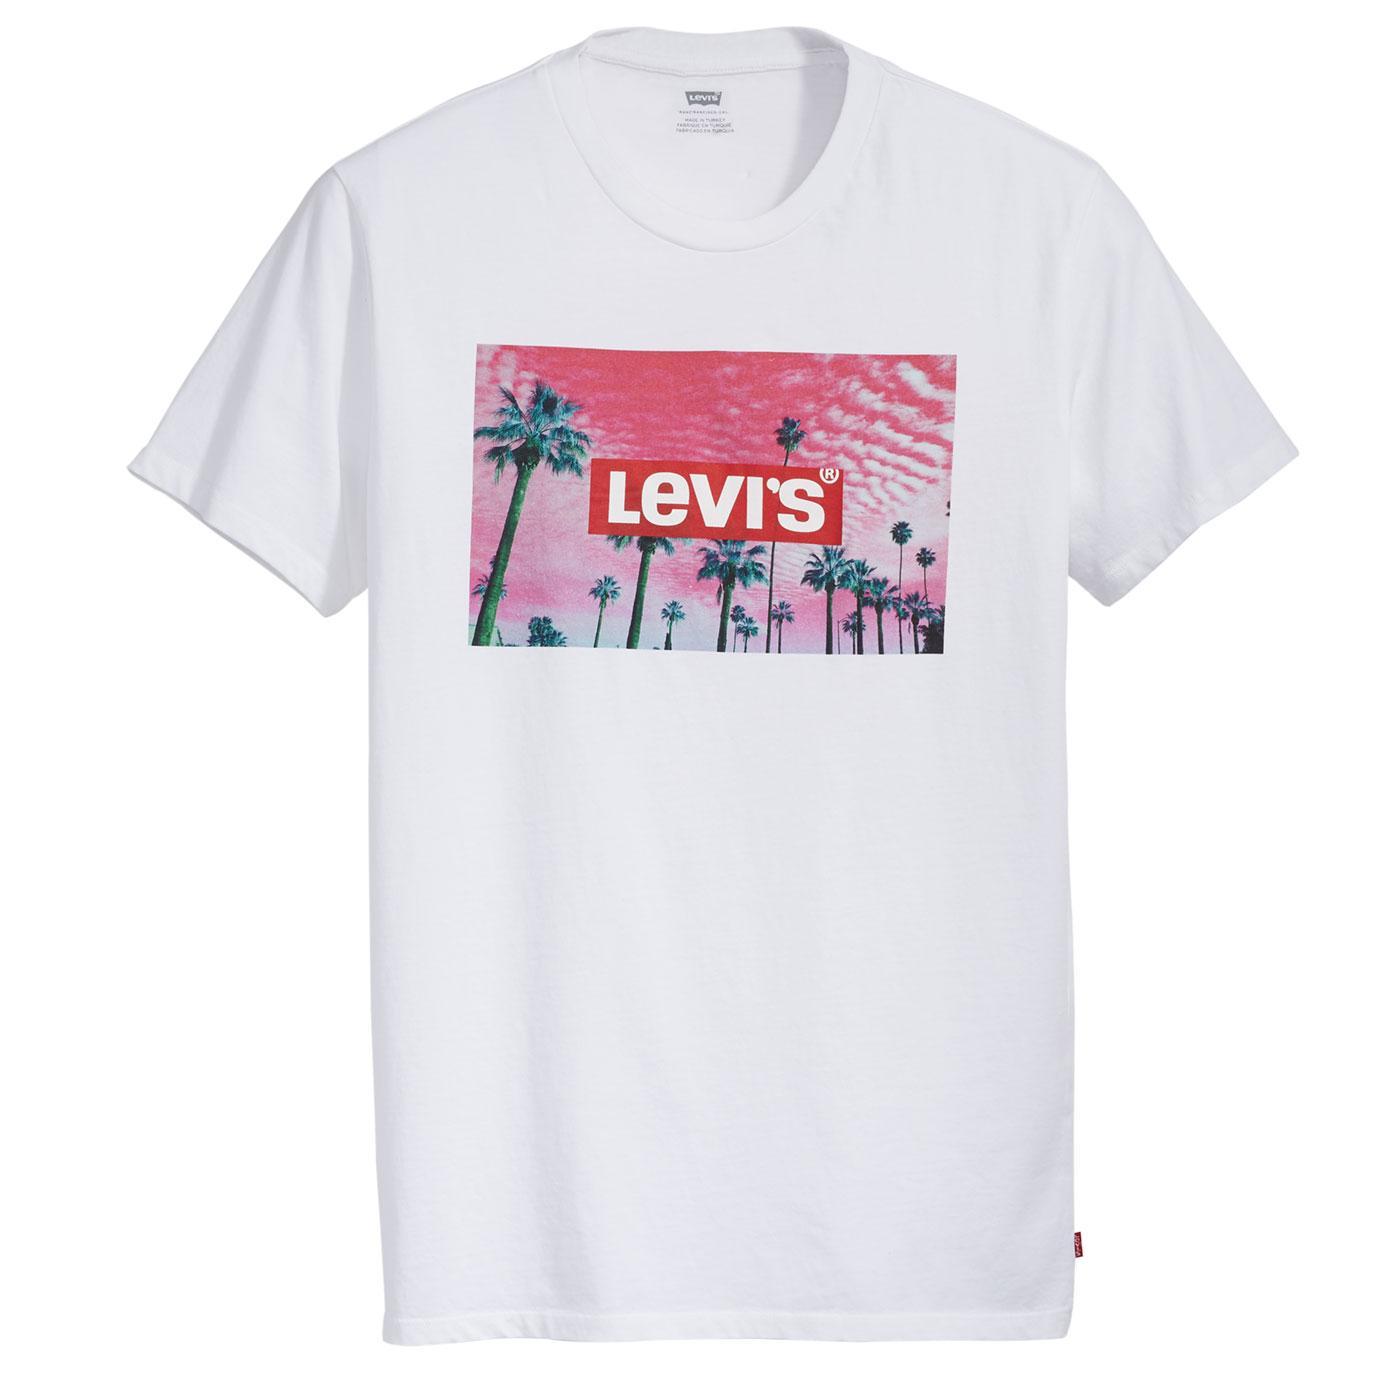 LEVI'S Retro Miami Palm Trees Photo Print T-shirt